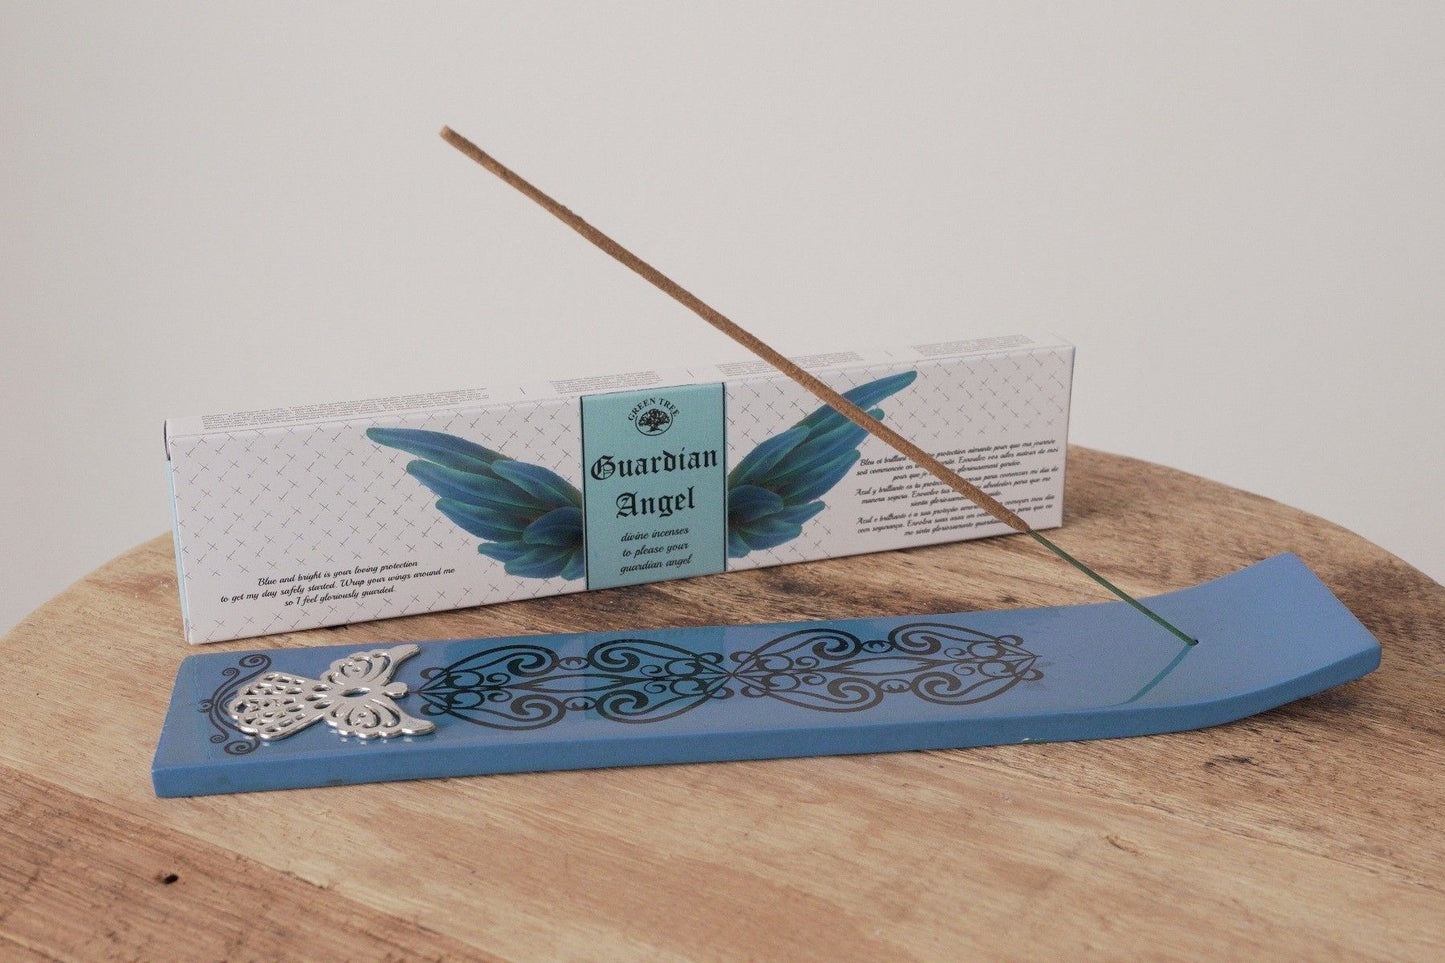 Guardian Angel Incense Sticks